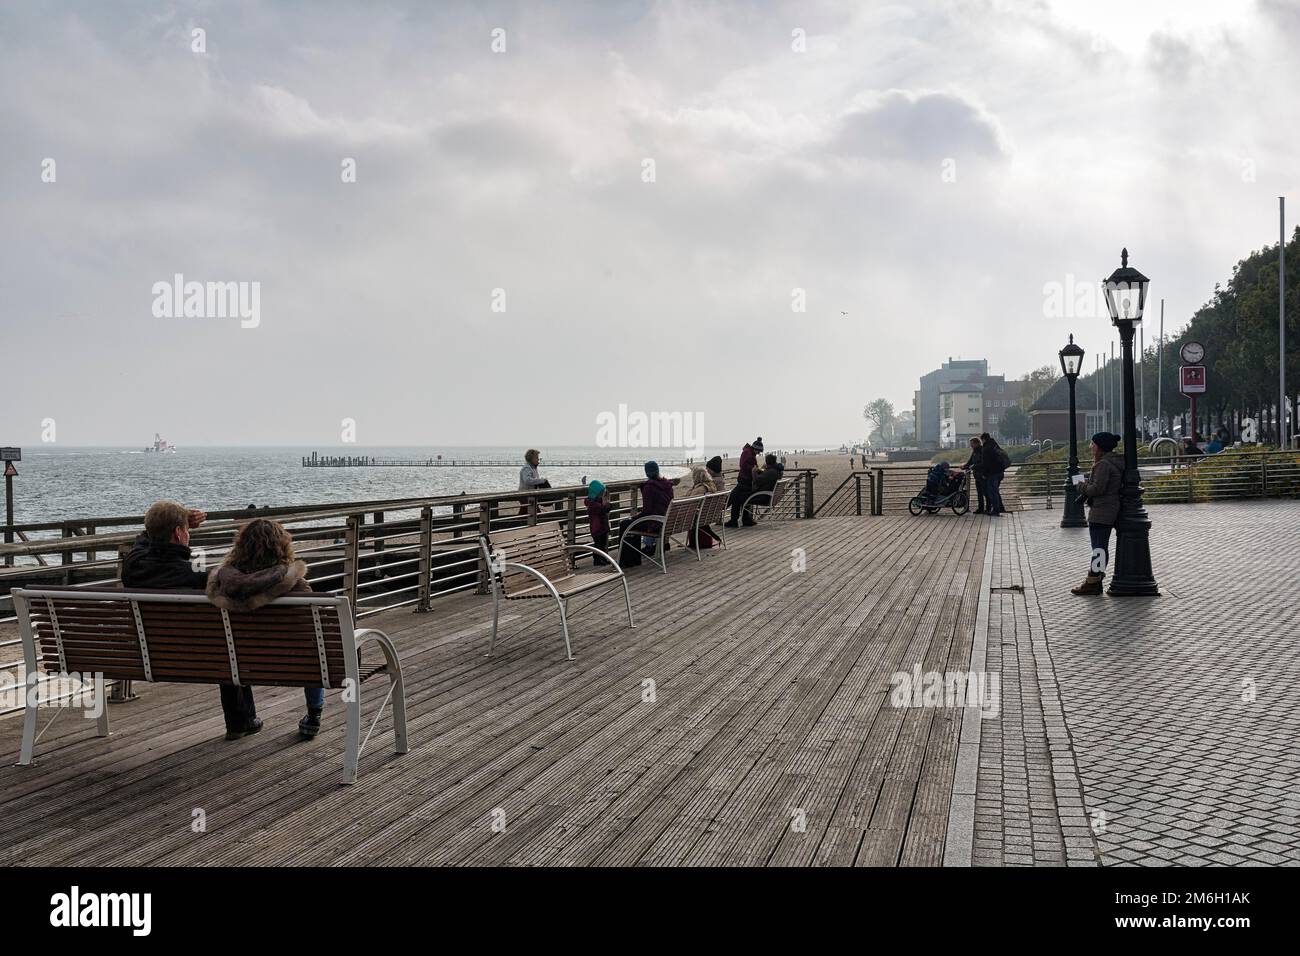 Pedestrians sitting on benches, looking at the sea, dreary autumn weather, haze, Wyk auf Foehr promenade, Foehr Island, North Frisia, North Sea Stock Photo